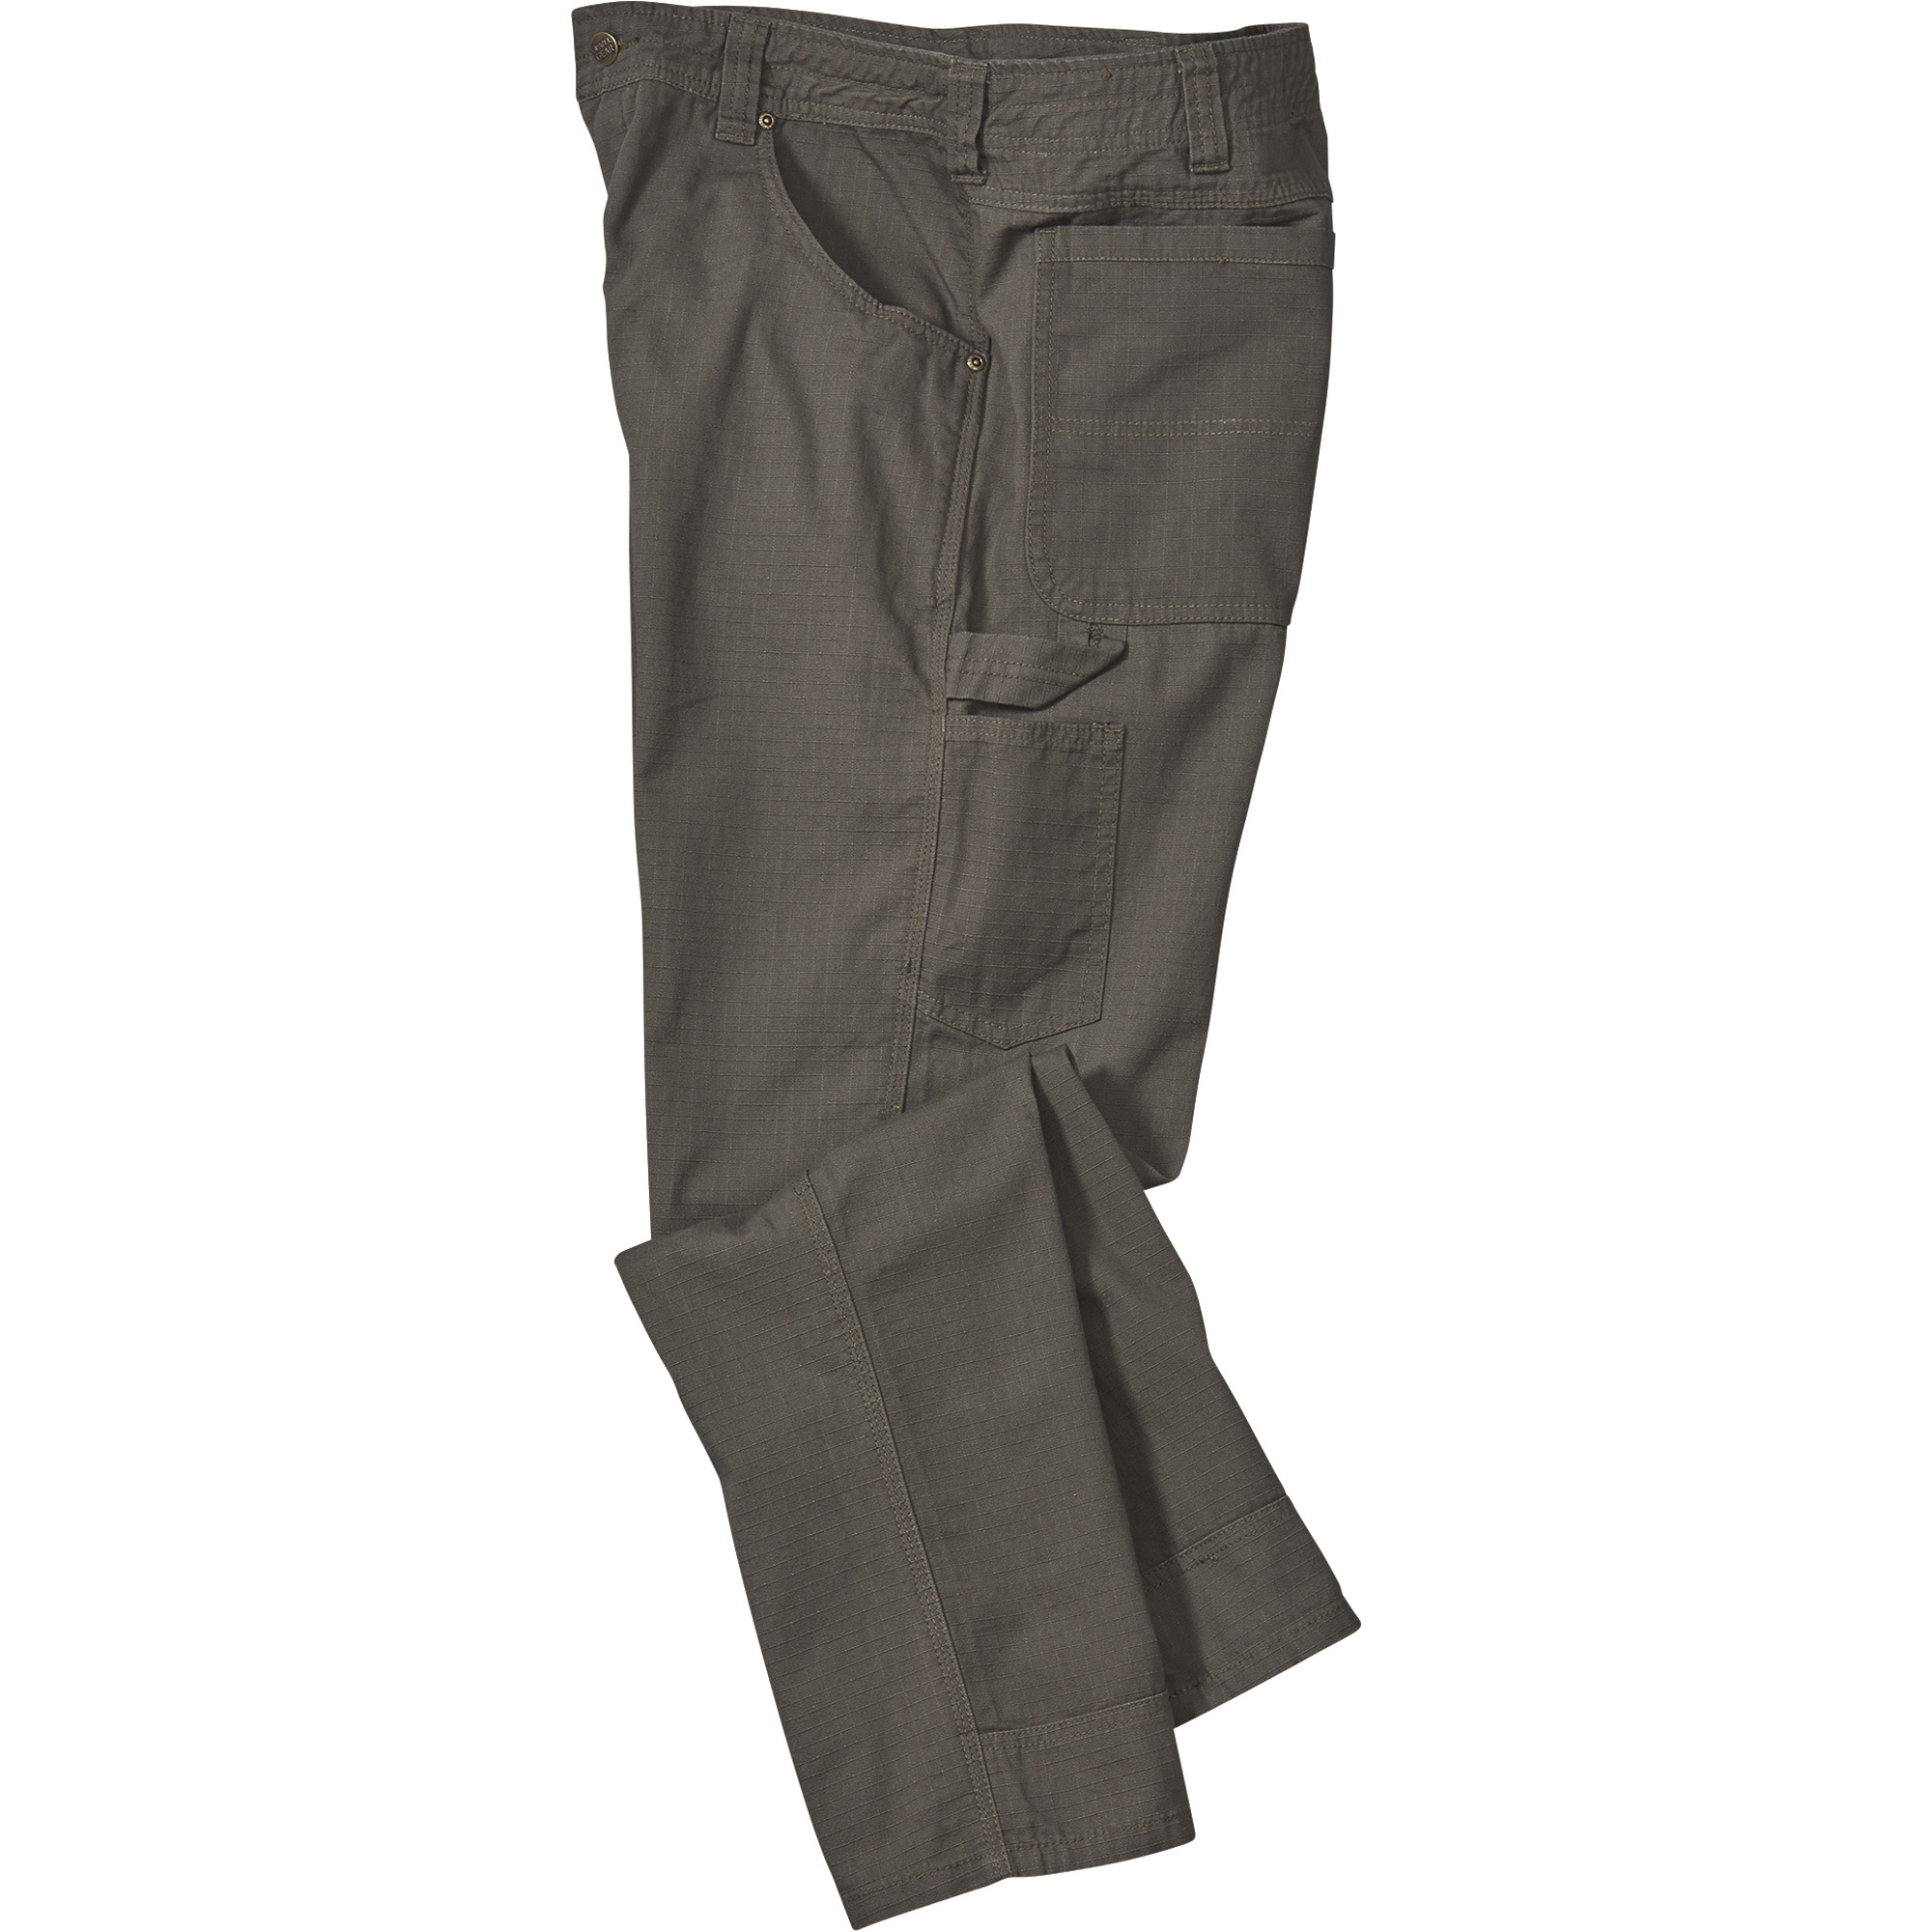 Gravel Gear Men's Cotton Ripstop Carpenter Pants with Teflon Fabric Protector â Moss, 34Inch Waist x 30Inch Inseam